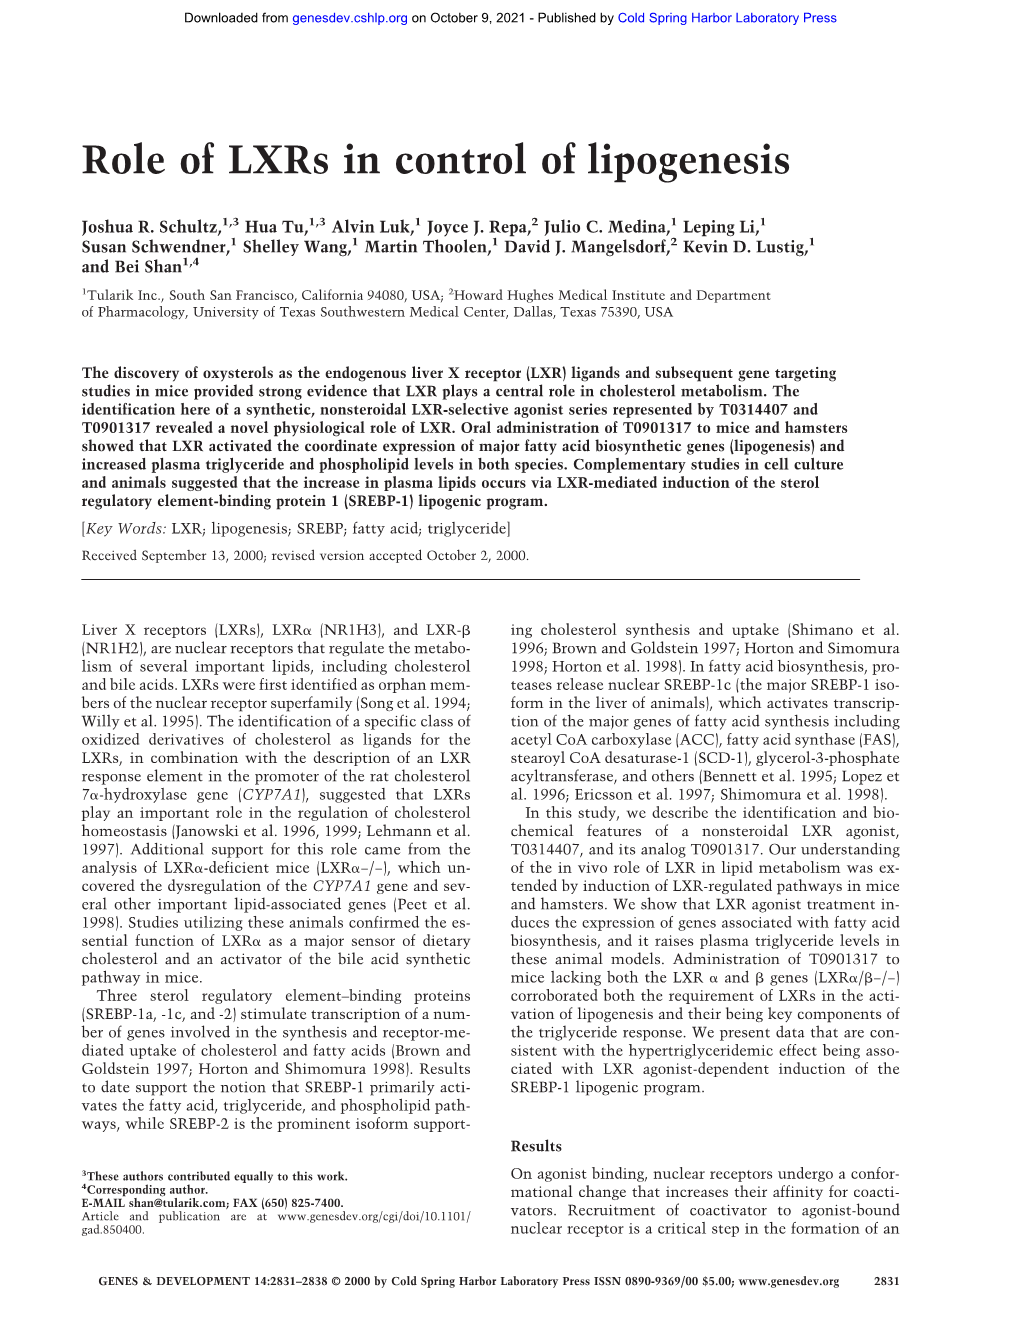 Role of Lxrs in Control of Lipogenesis